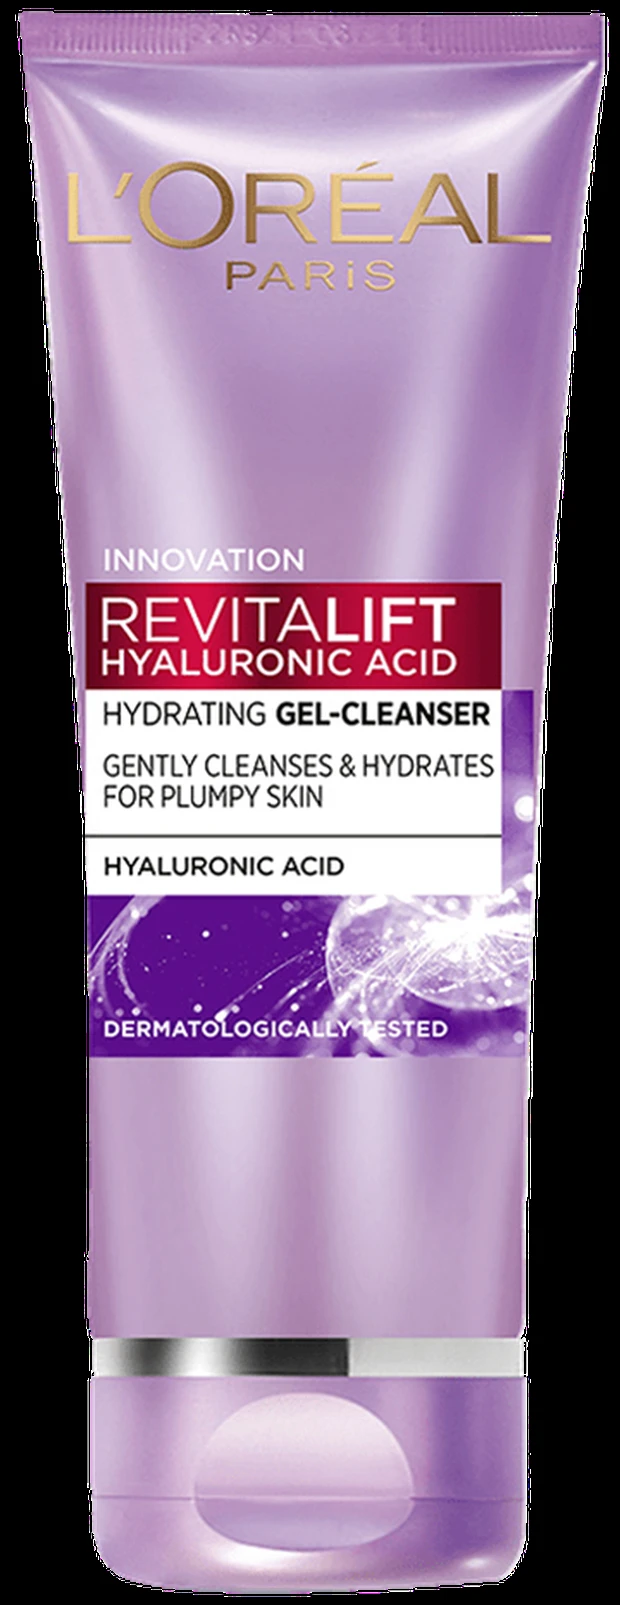 L'Oreal Paris Revitalift Hyaluronic Acid Hydrating Gel Cleanser (sumber : www.loreal-paris.co.id)